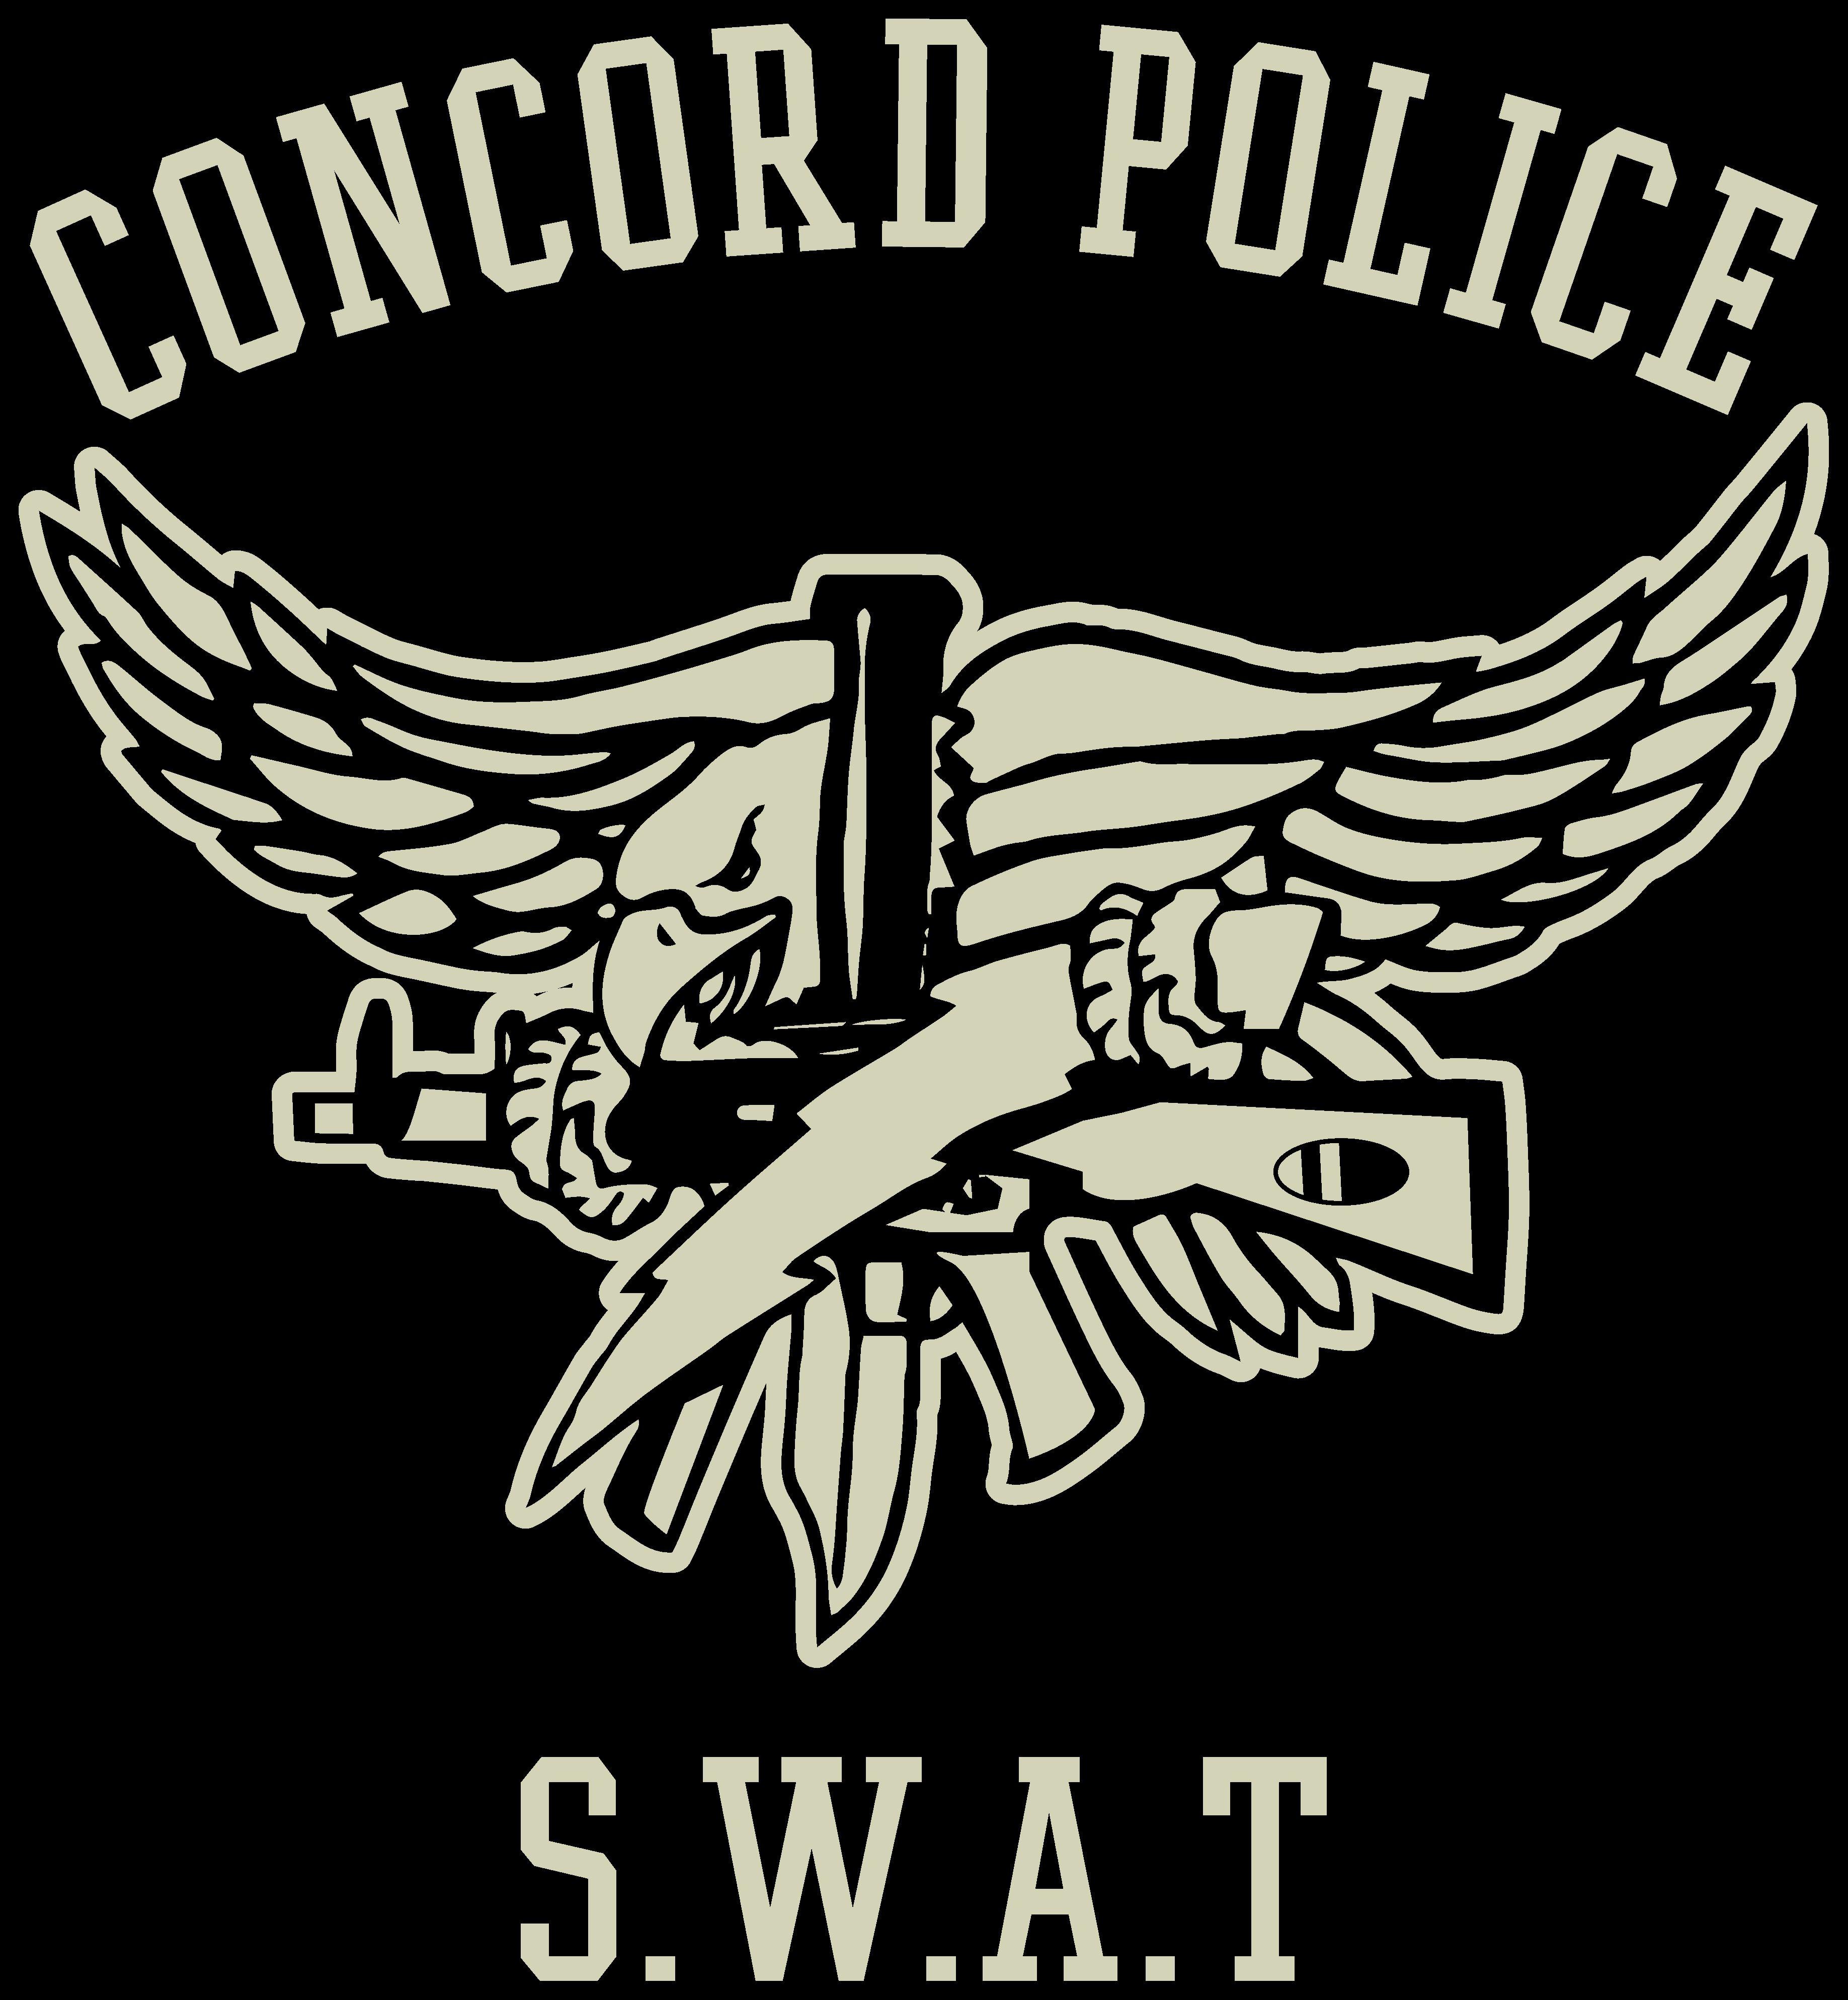 Swat Logo - CONCORD SWAT LOGO - Atech Imagewear | Embroidery, Fabric Printing ...